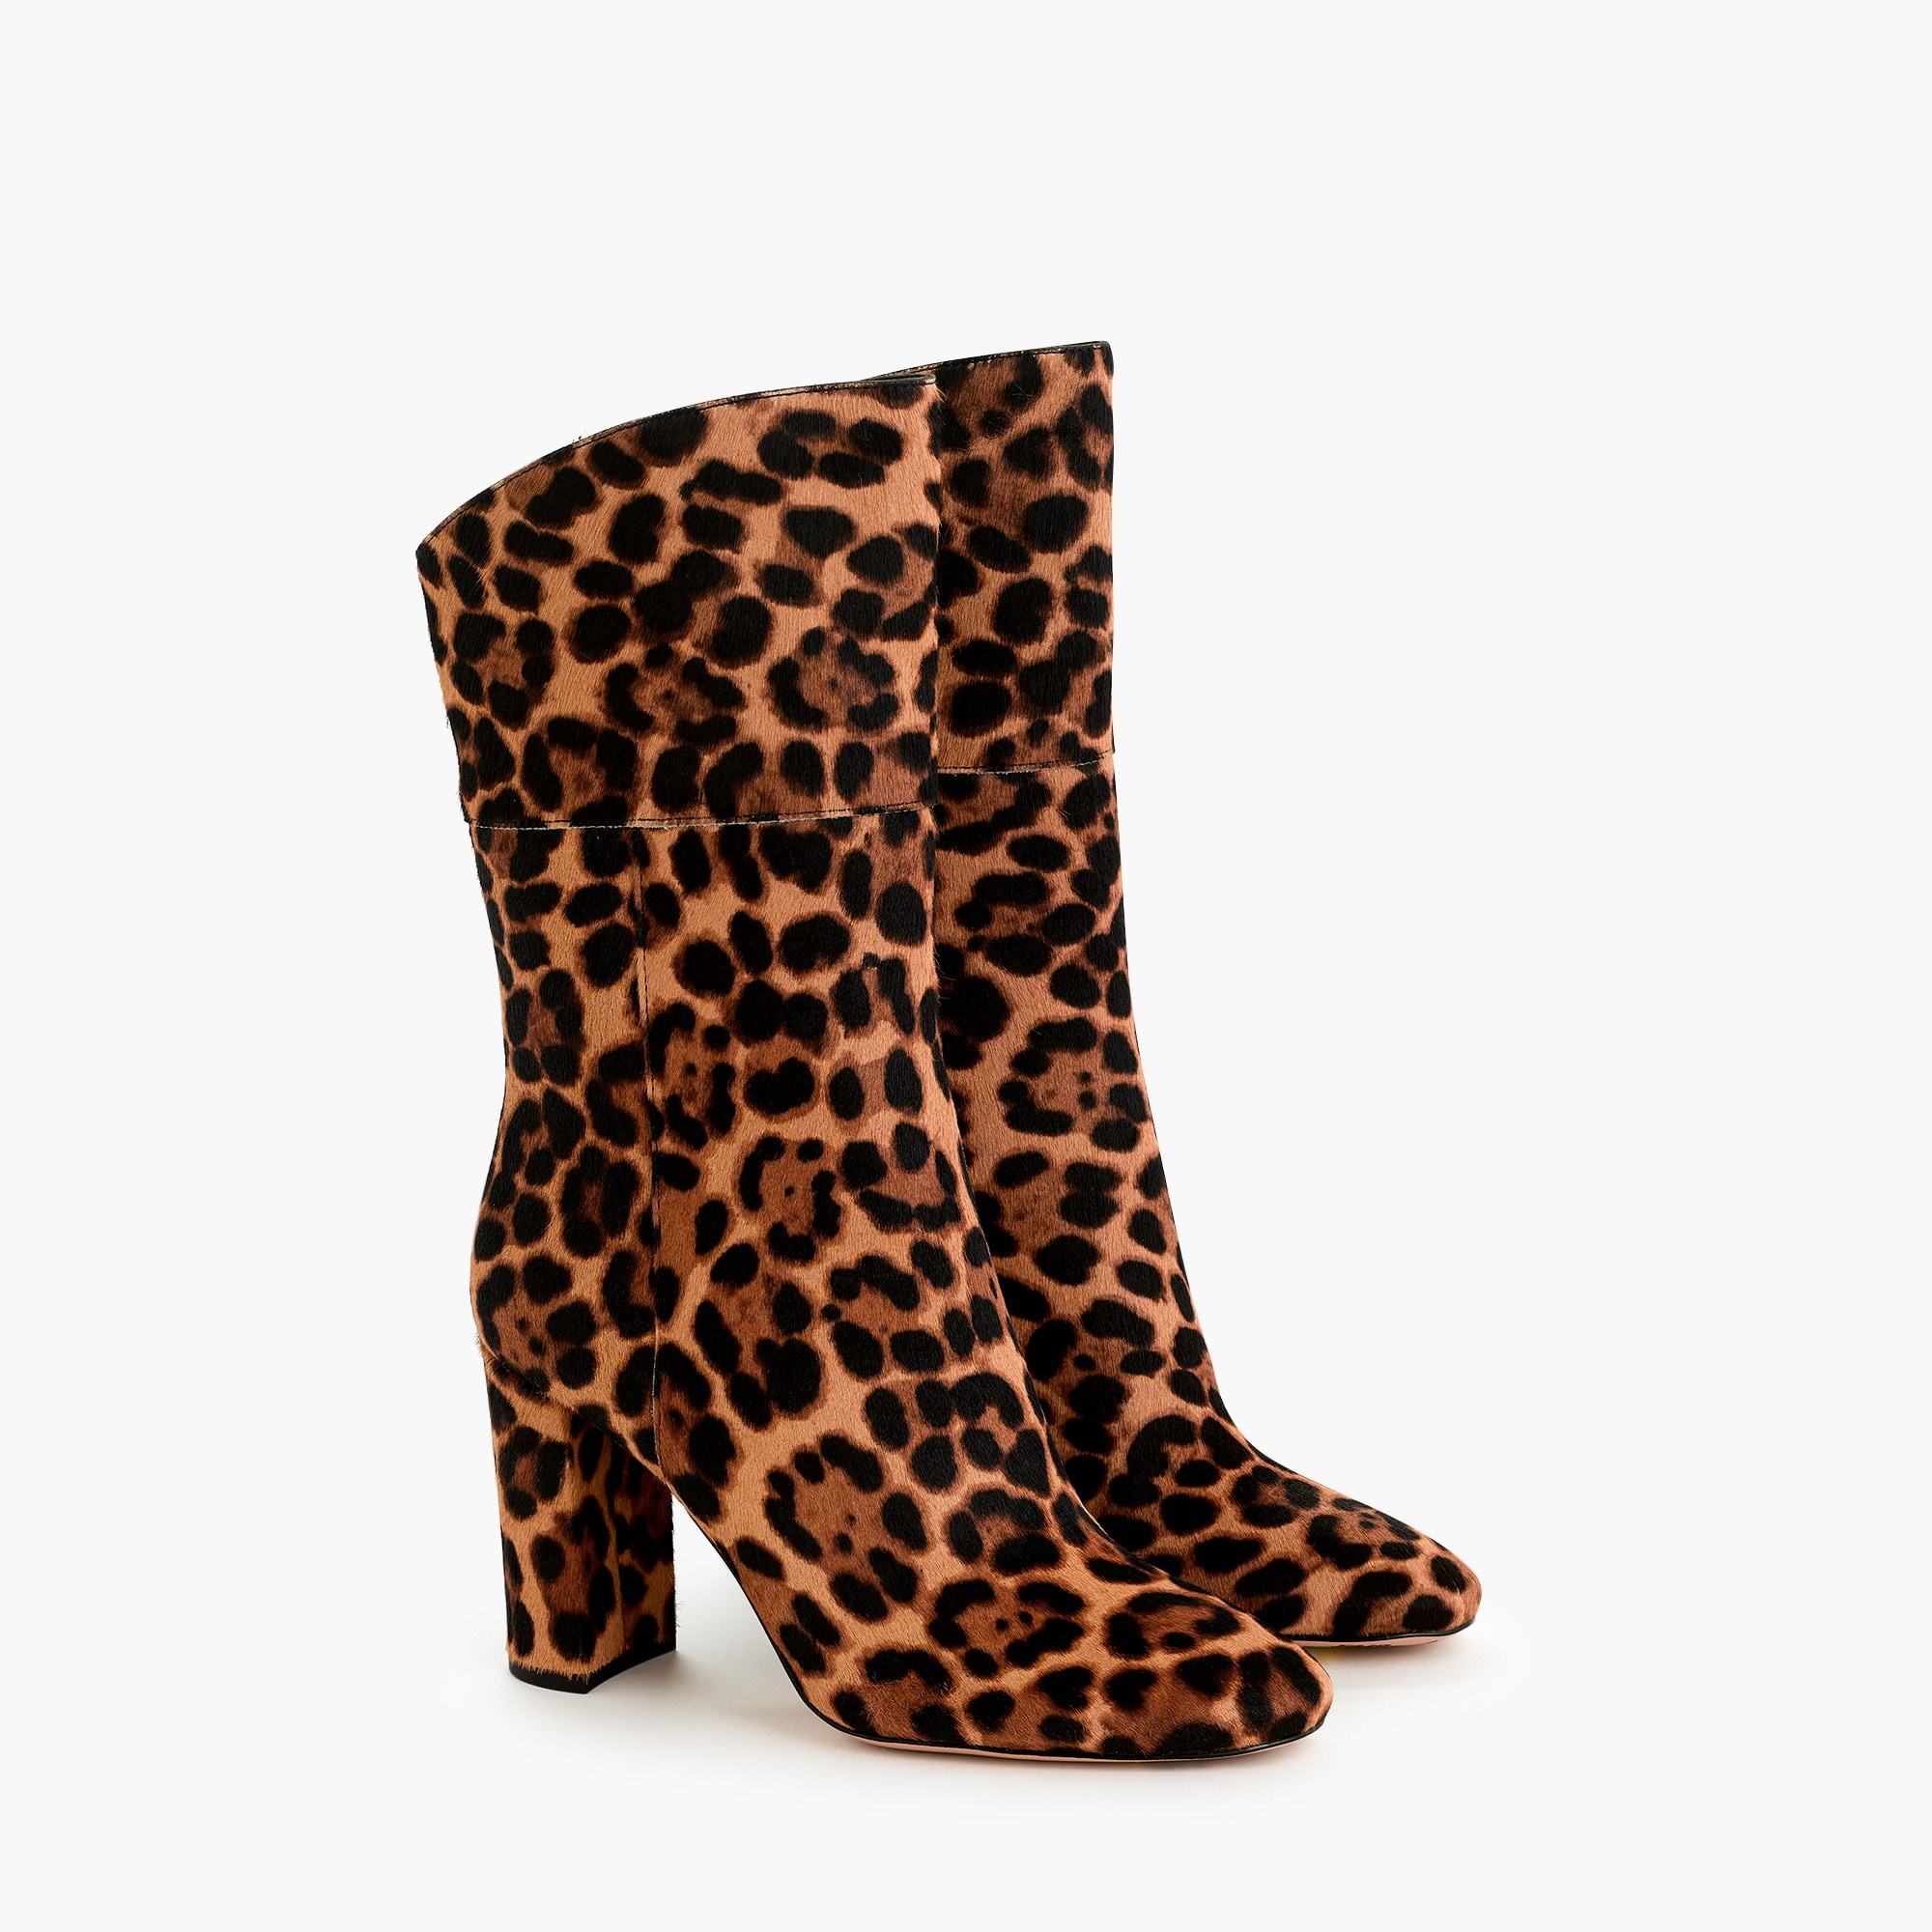 J.Crew: Midcalf High-heel Boots In Leopard Calf Hair